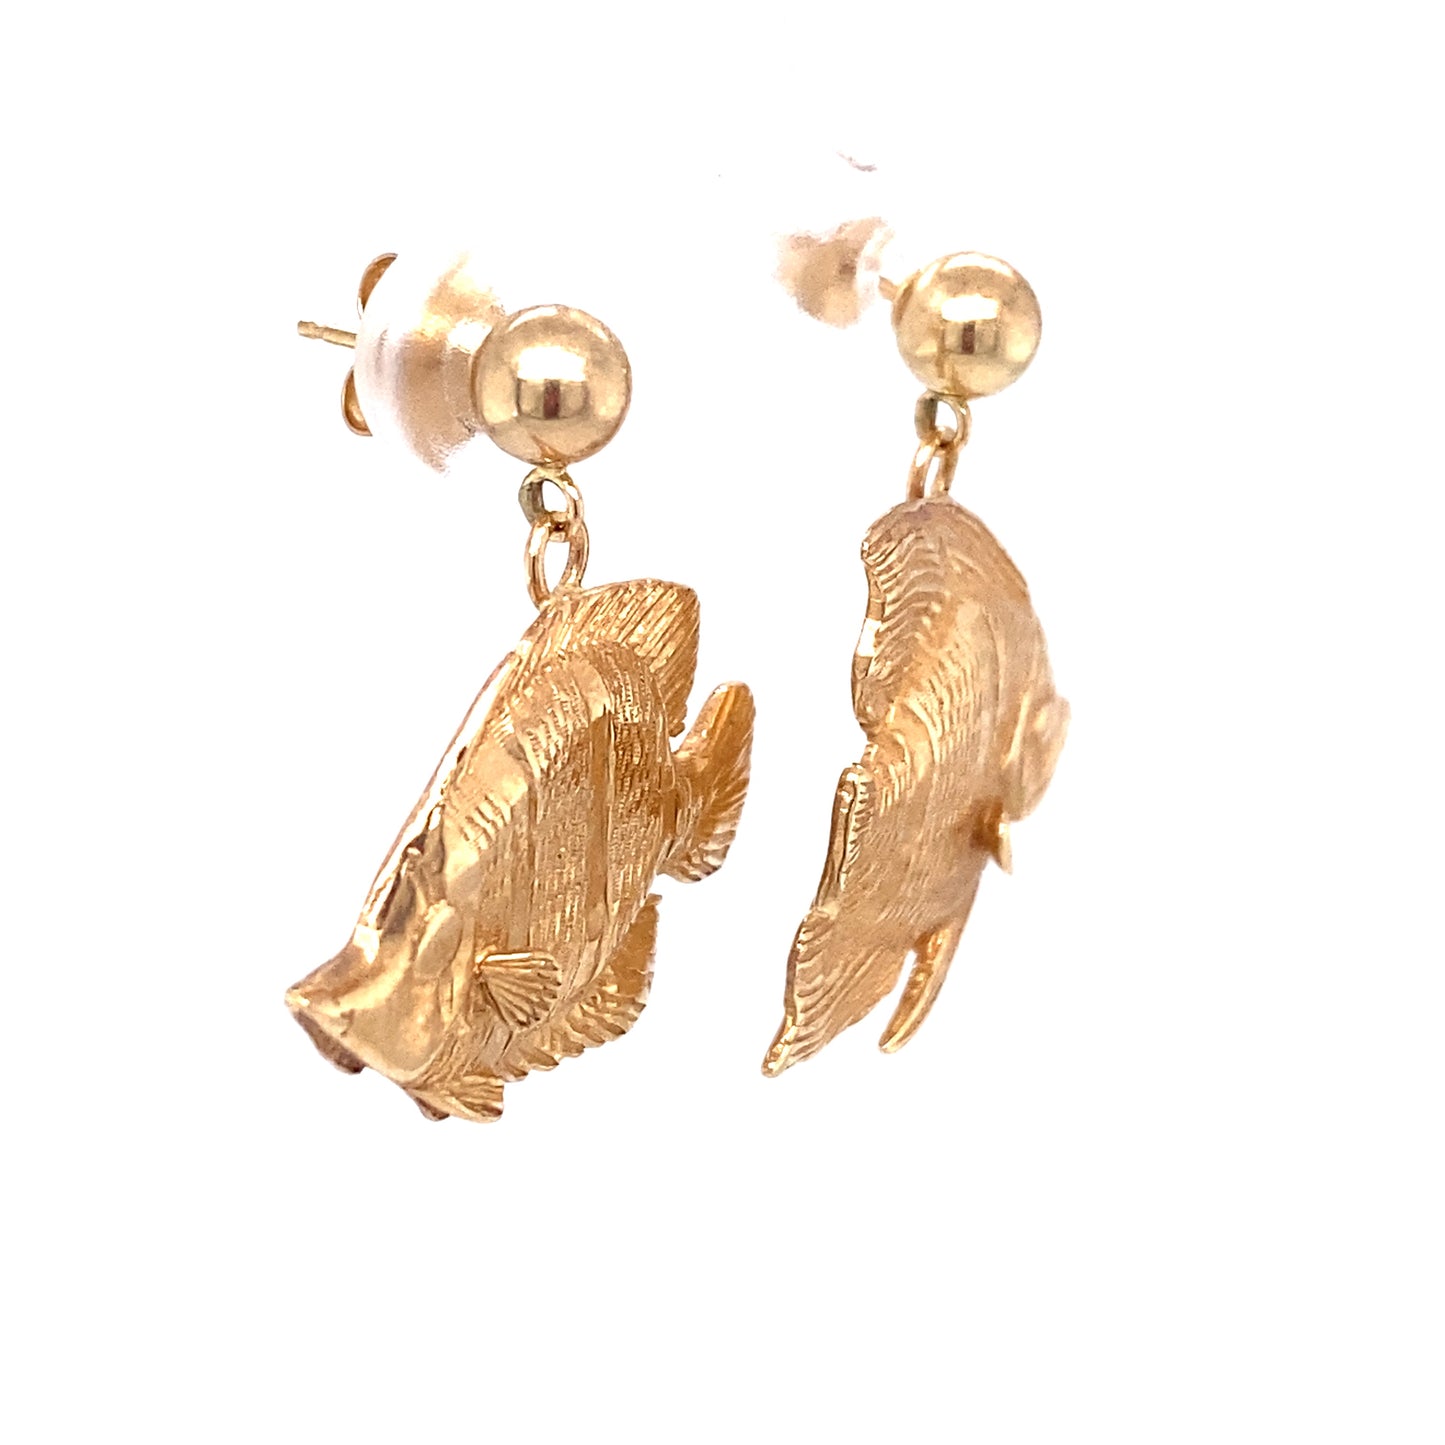 Circa 1950s Fish Dangle Earrings in 14K Gold